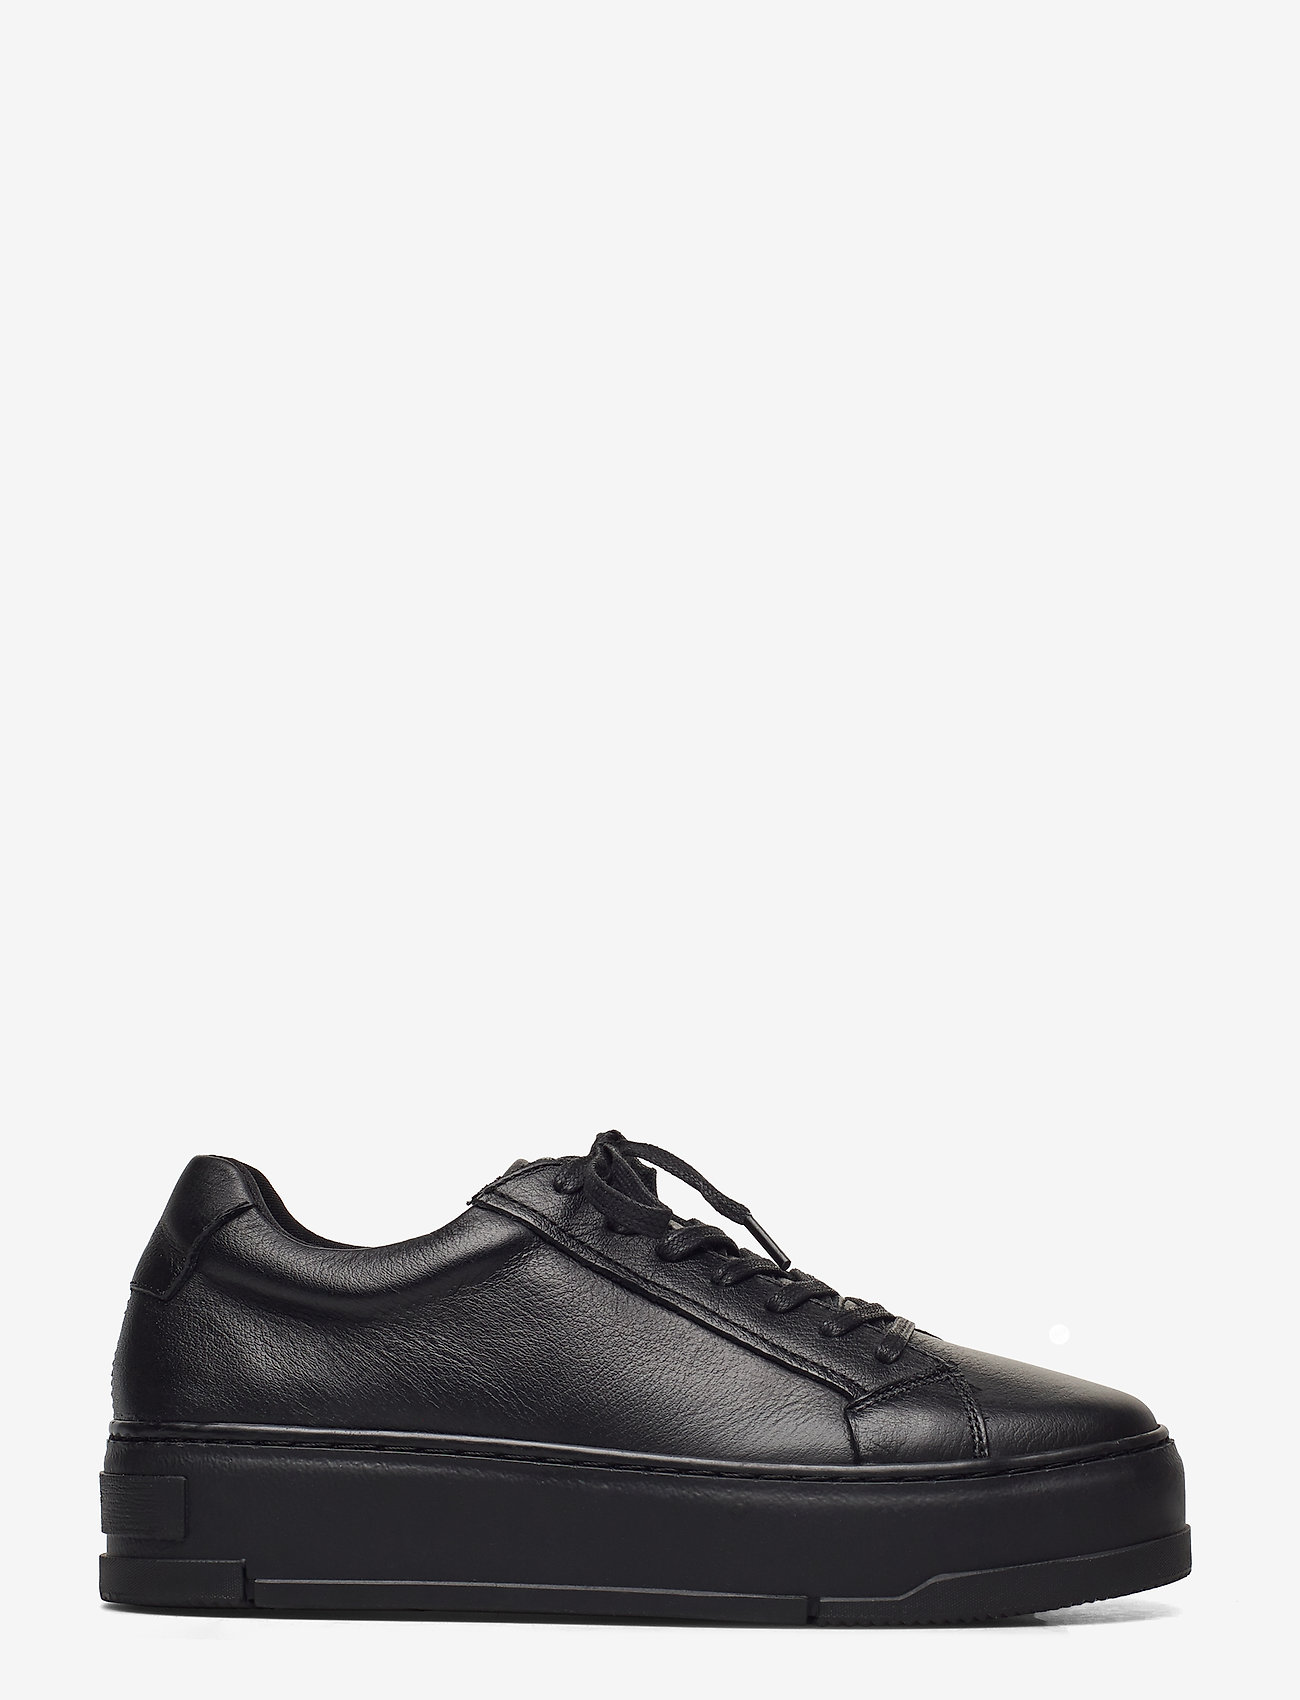 vagabond black sneakers